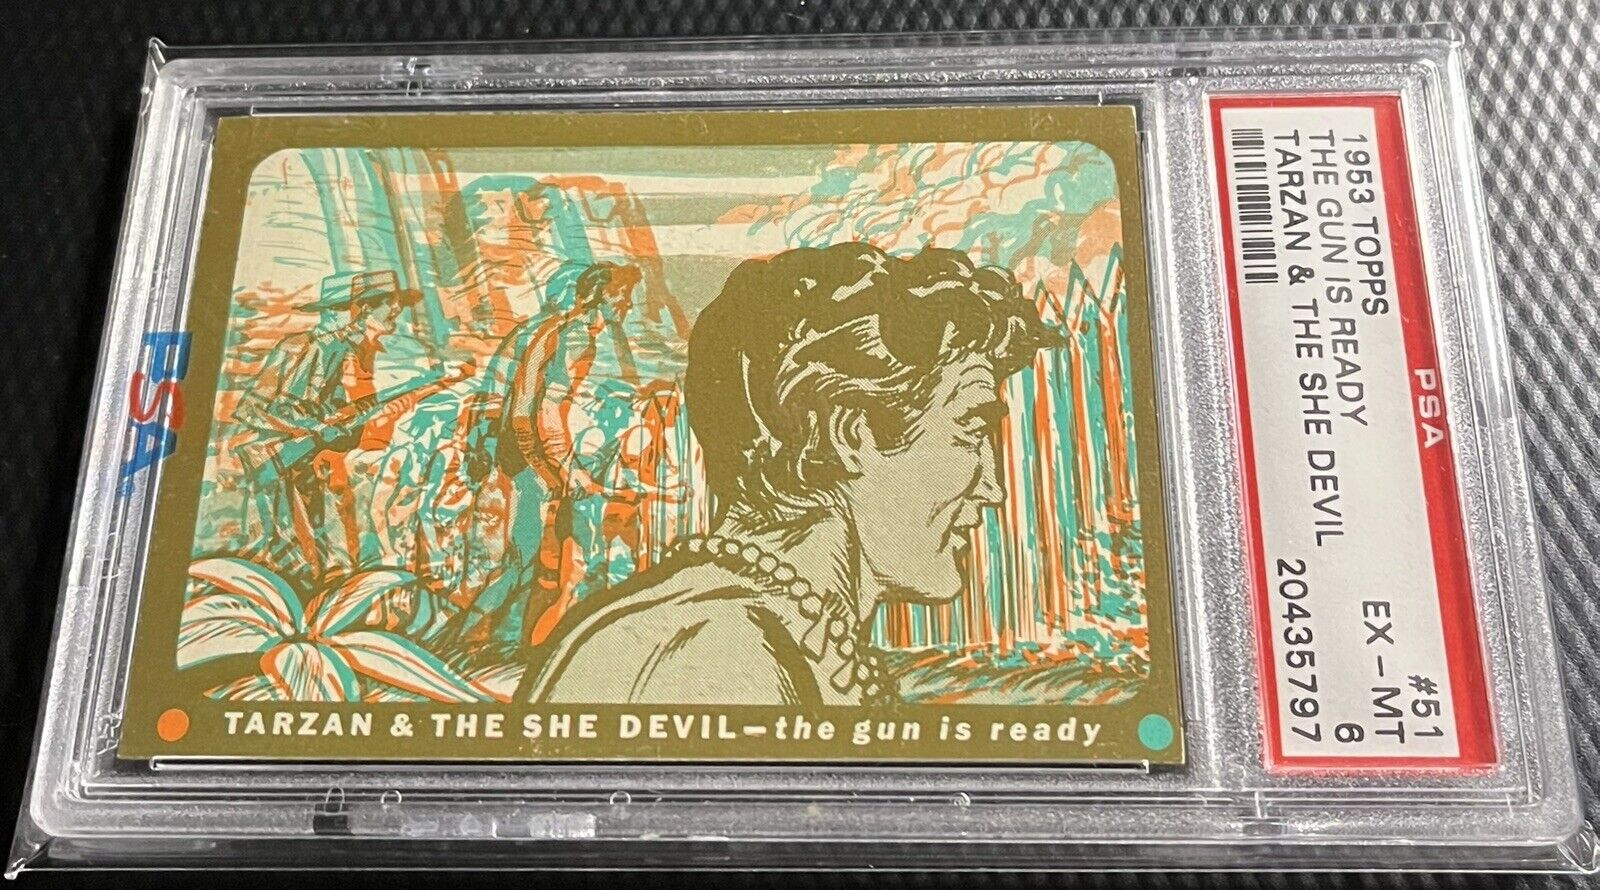 1953 Topps Tarzan & The She Devil PSA 6 Card #51 - The Gun is Ready - Vintage